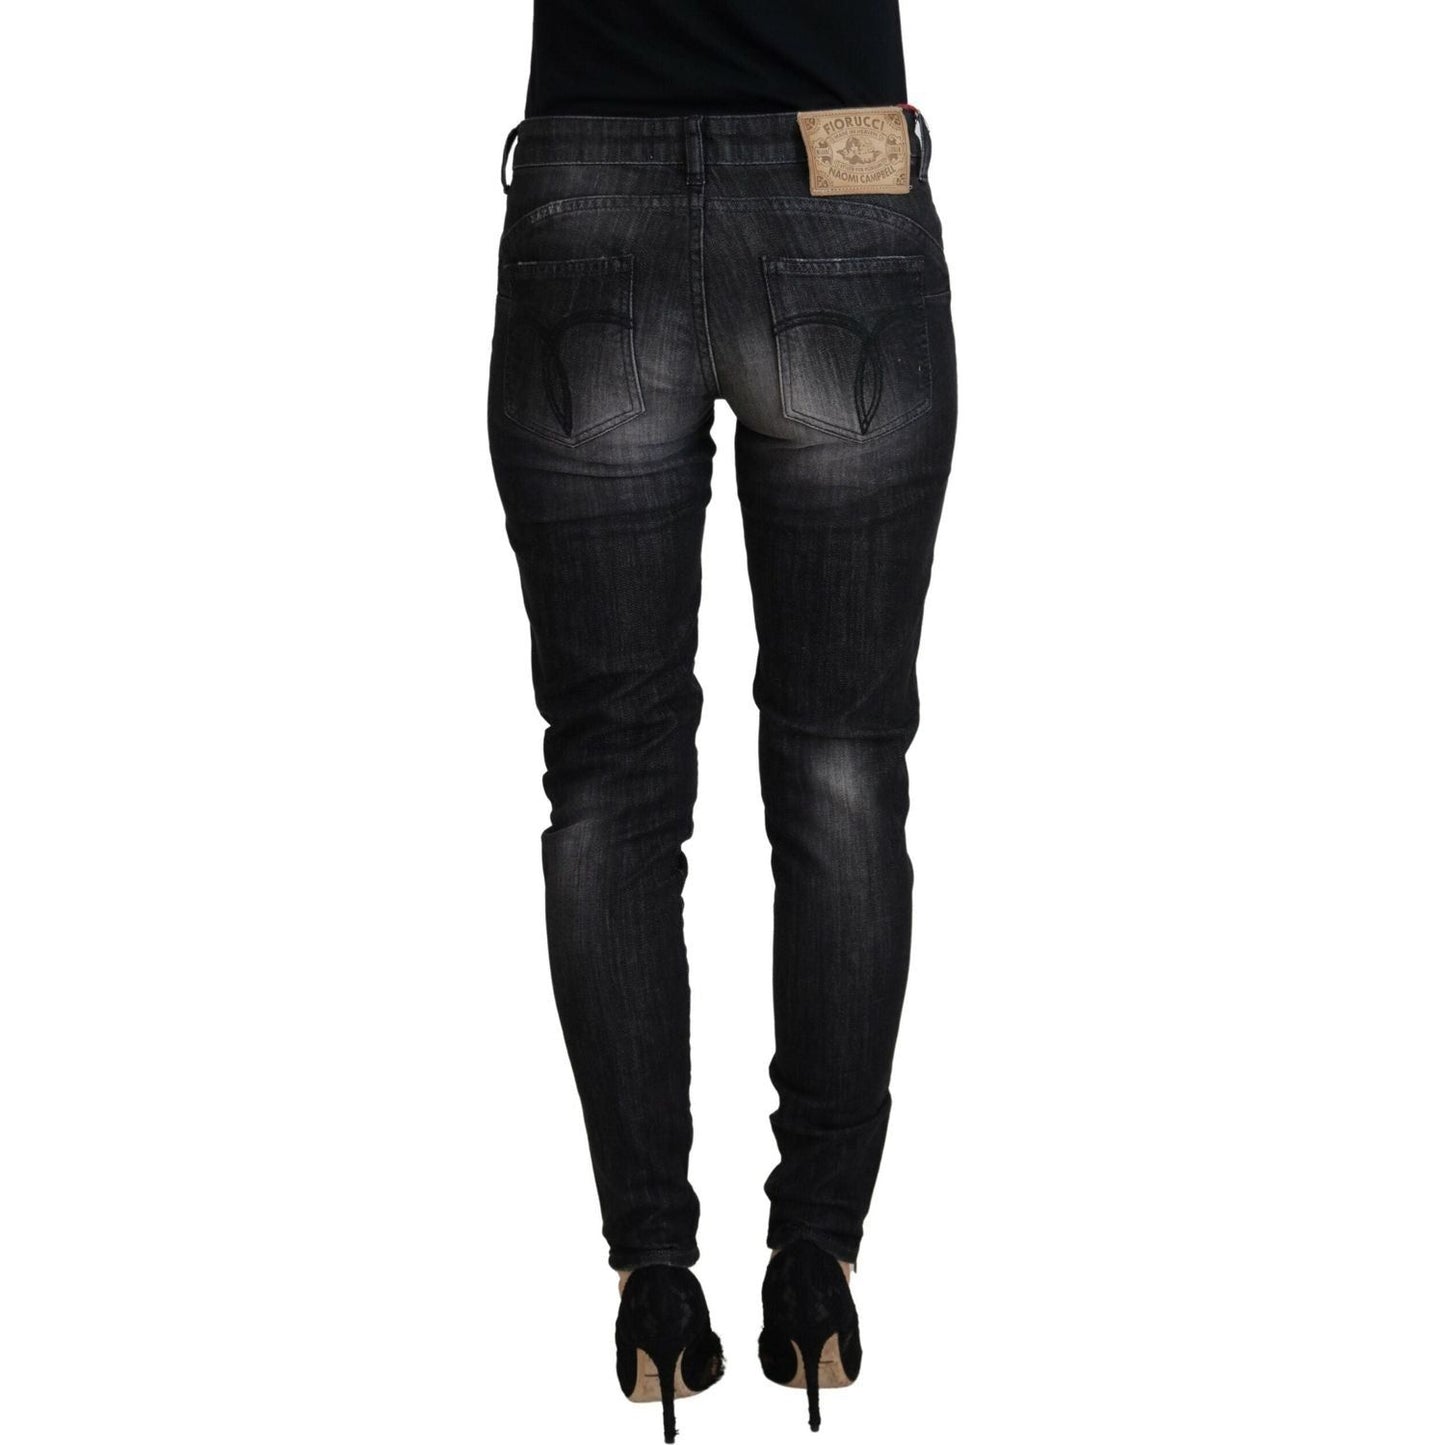 Fiorucci Chic Black Low Waist Skinny Jeans black-cotton-low-waist-skinny-women-casual-jeans